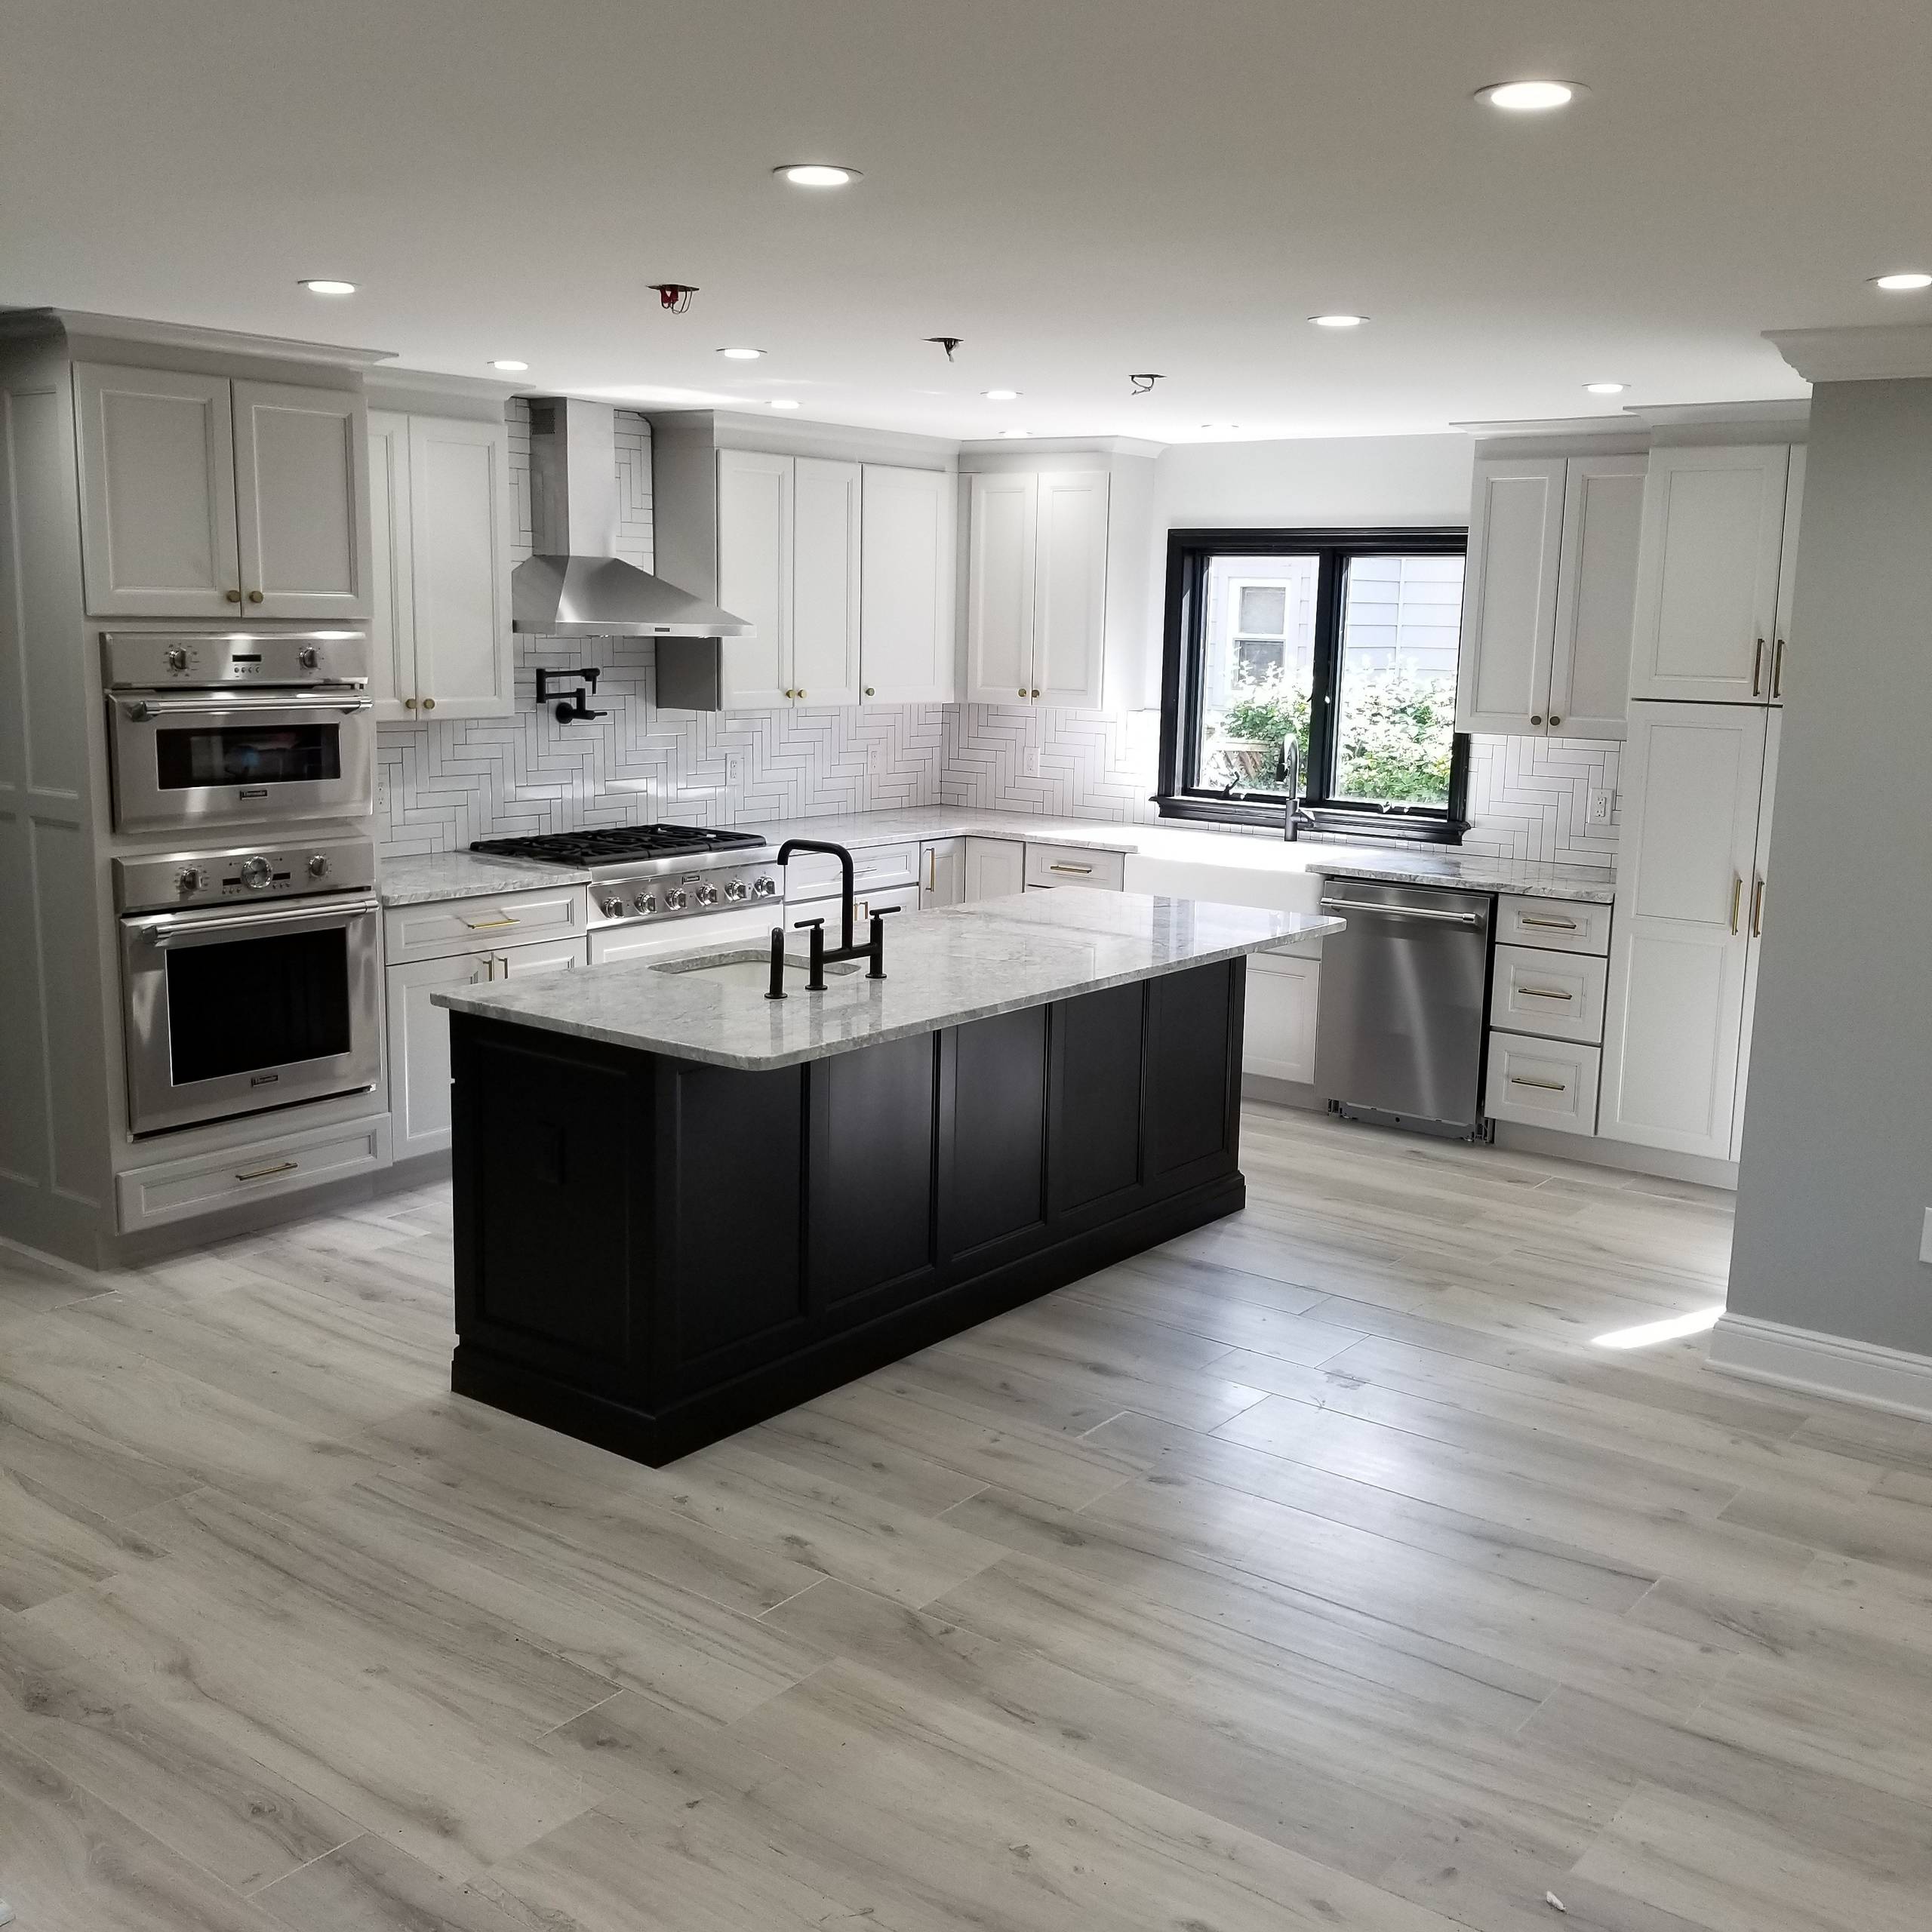 Grey Kitchen With Laminate Floors Ideas, Kitchen With Grey Laminate Flooring